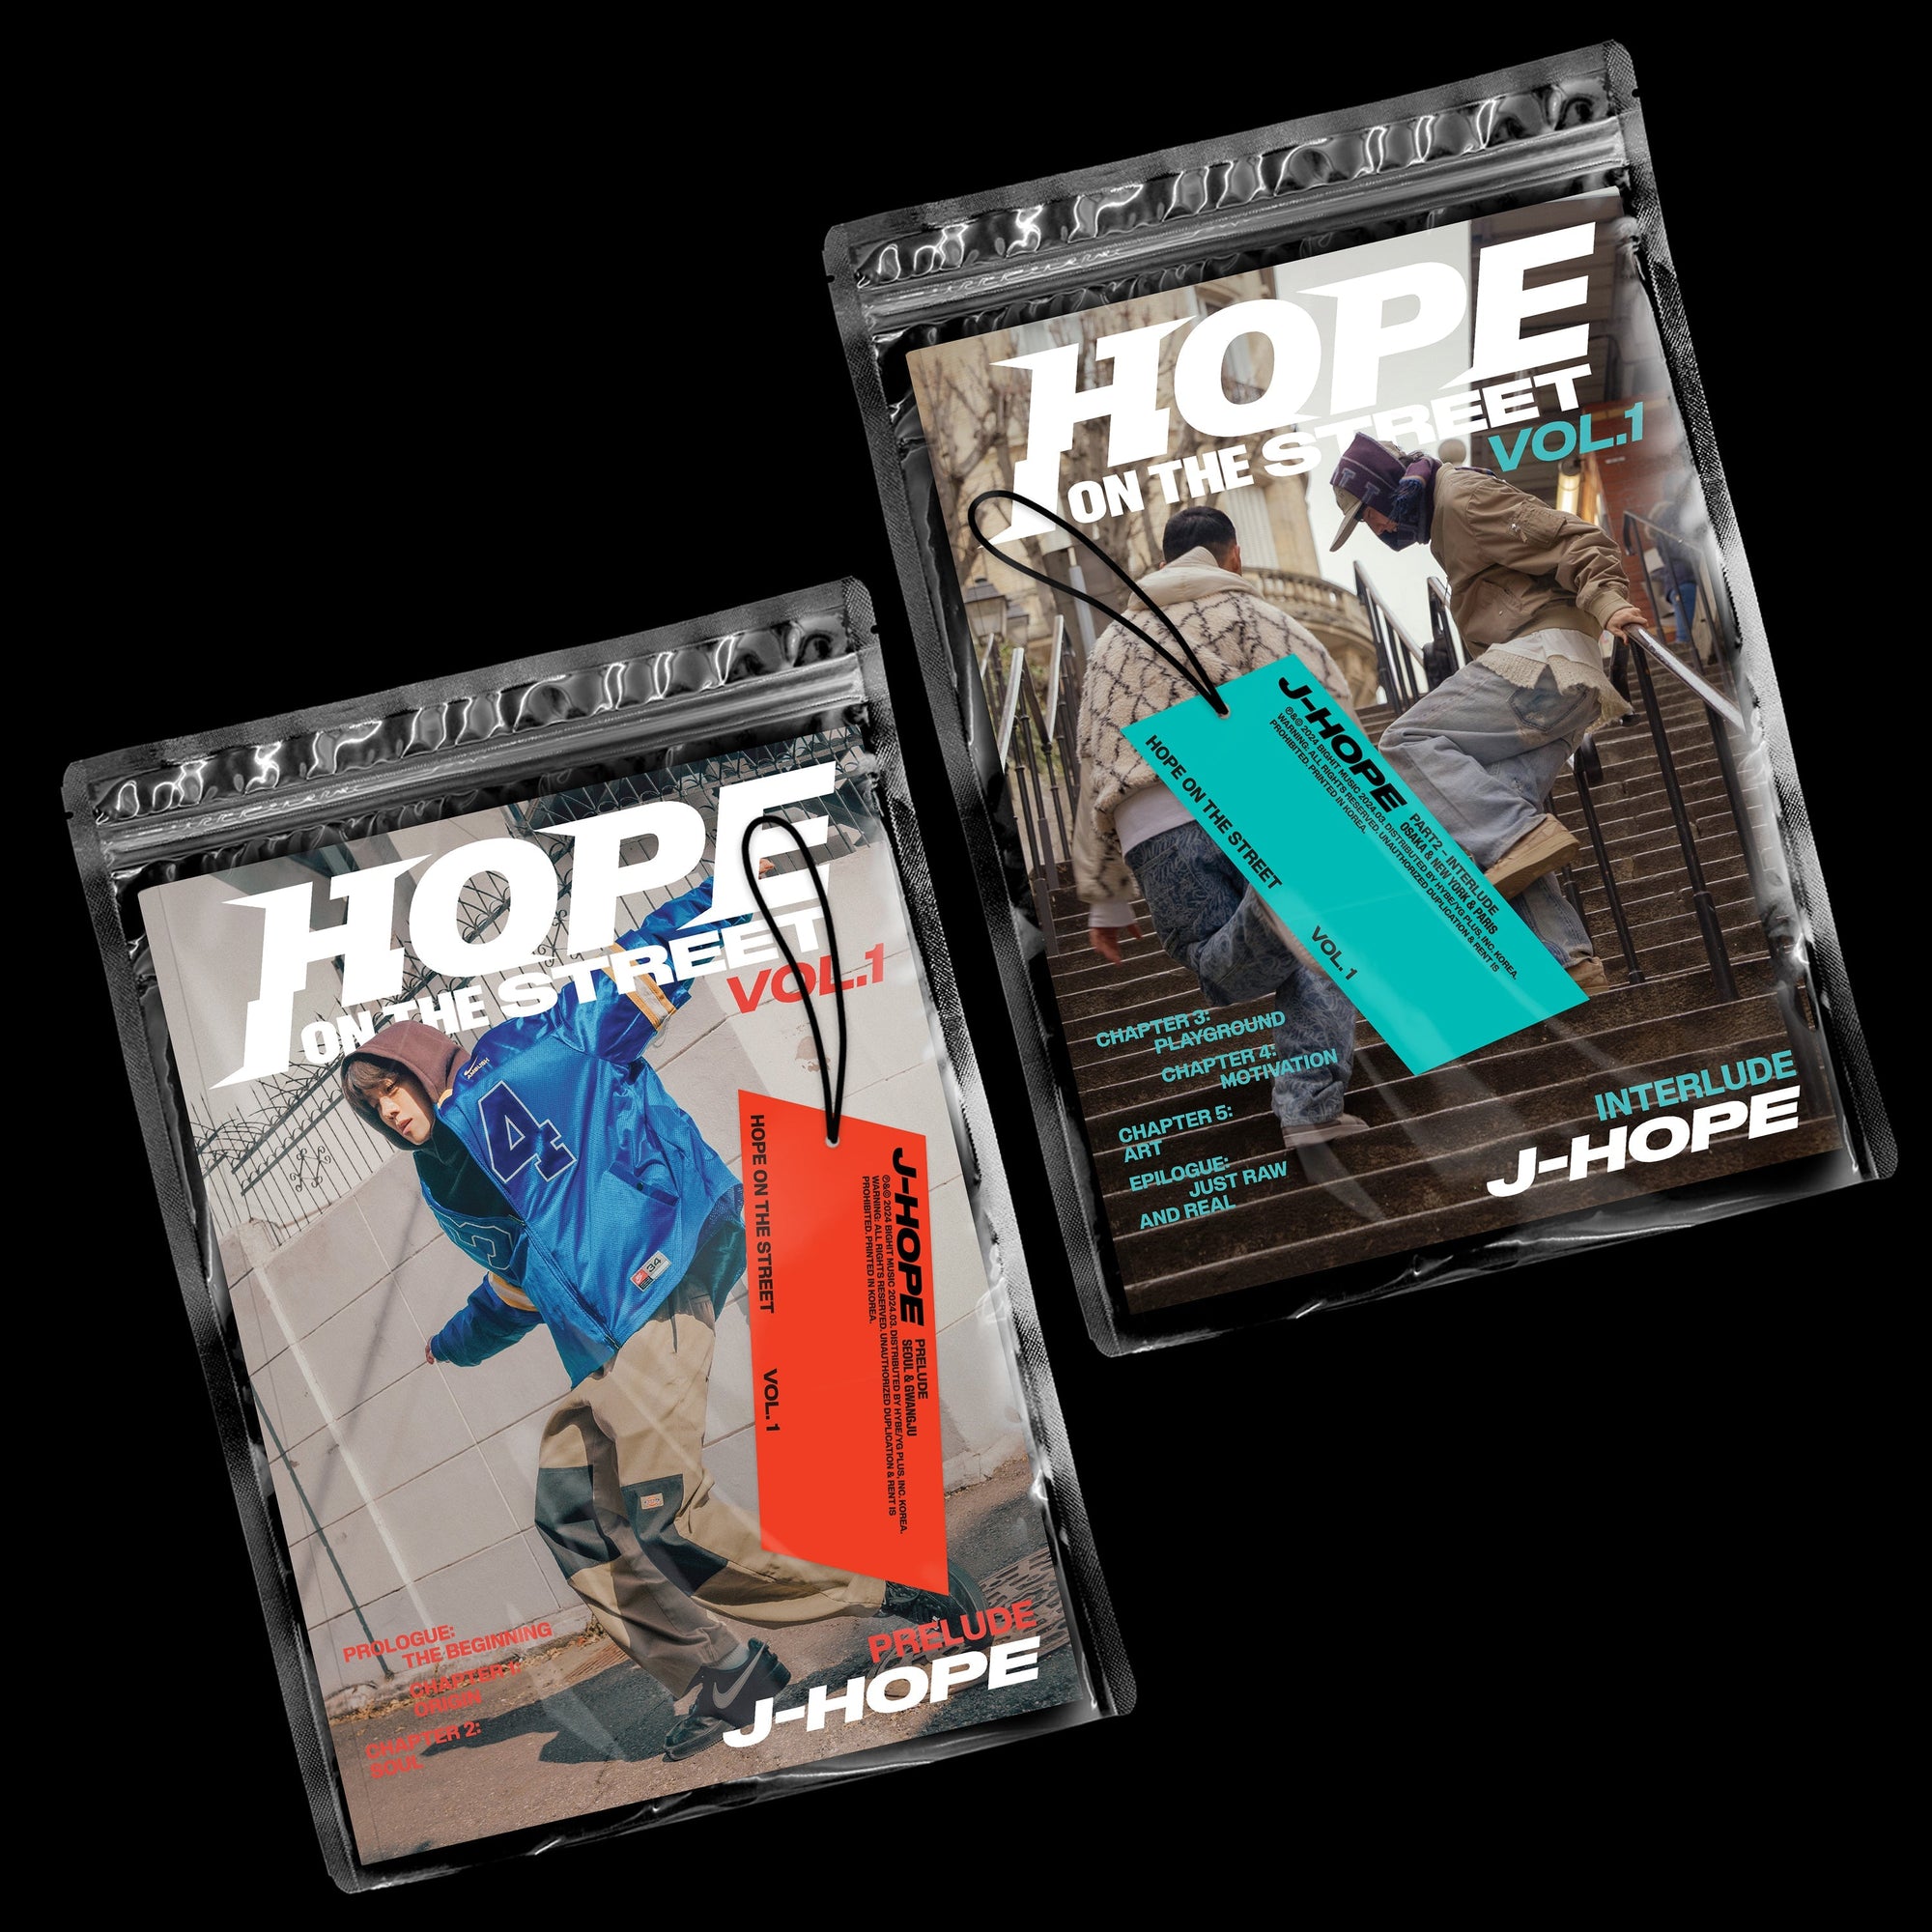 J-HOPE - HOPE ON THE STREET VOL.1 SPECIAL ALBUM